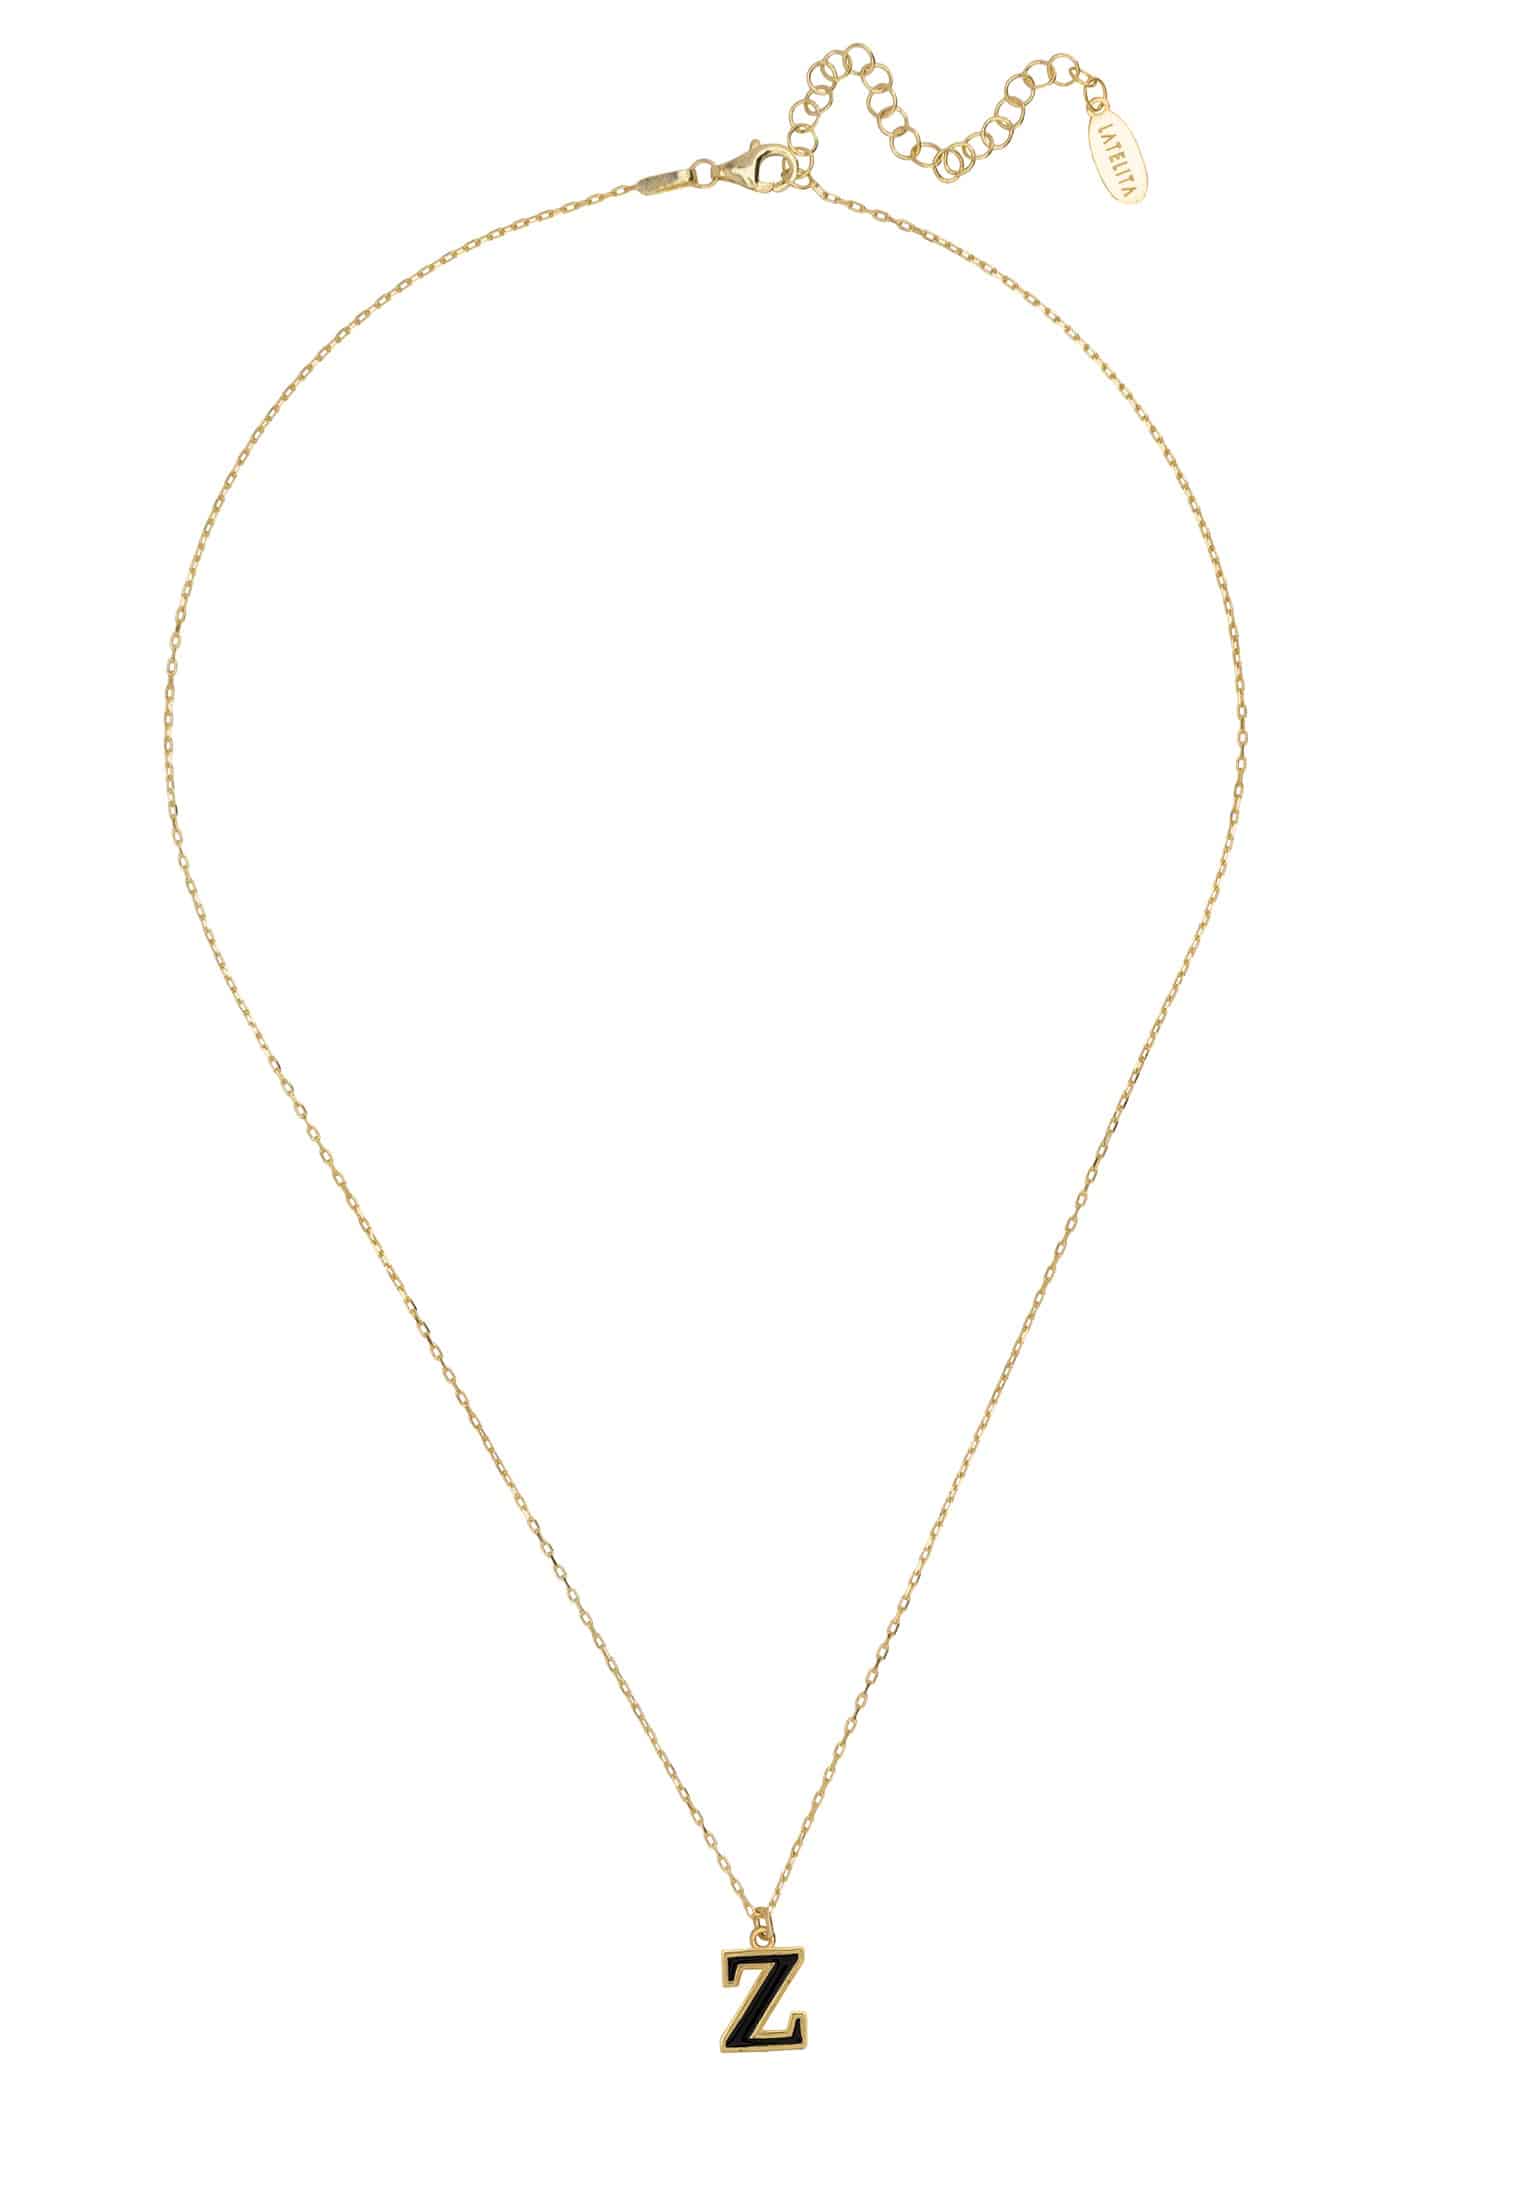 Gold Initial Enamel Pendant Necklace - Personalized Birthday Gift Idea Bijou Her